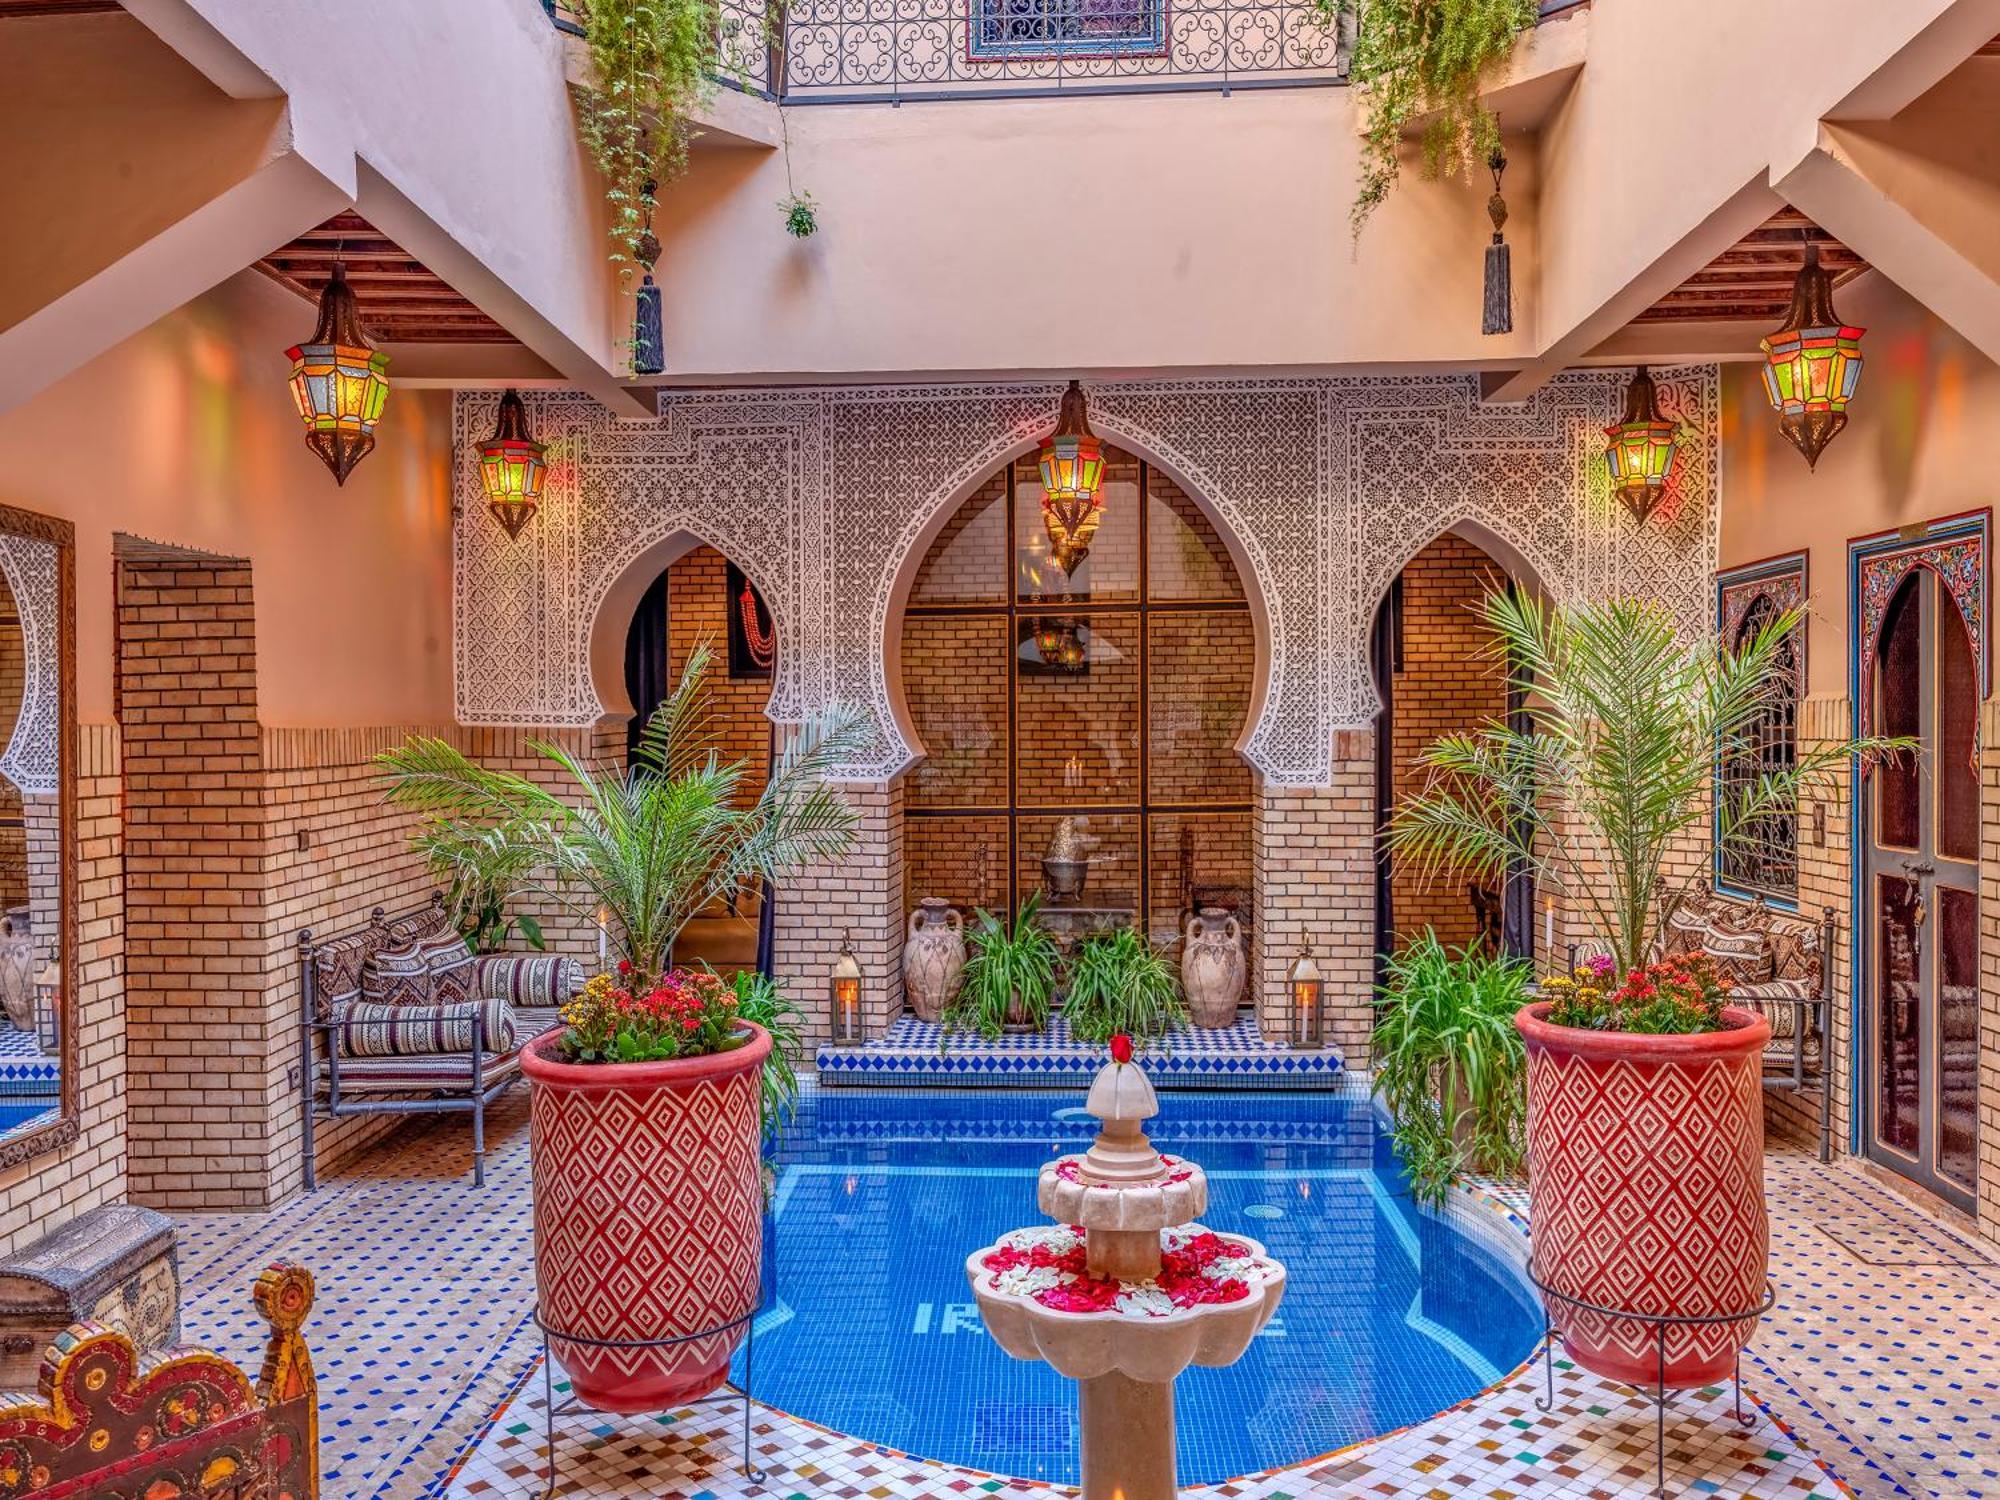 Riad Irhalne Marrakesh Exterior foto